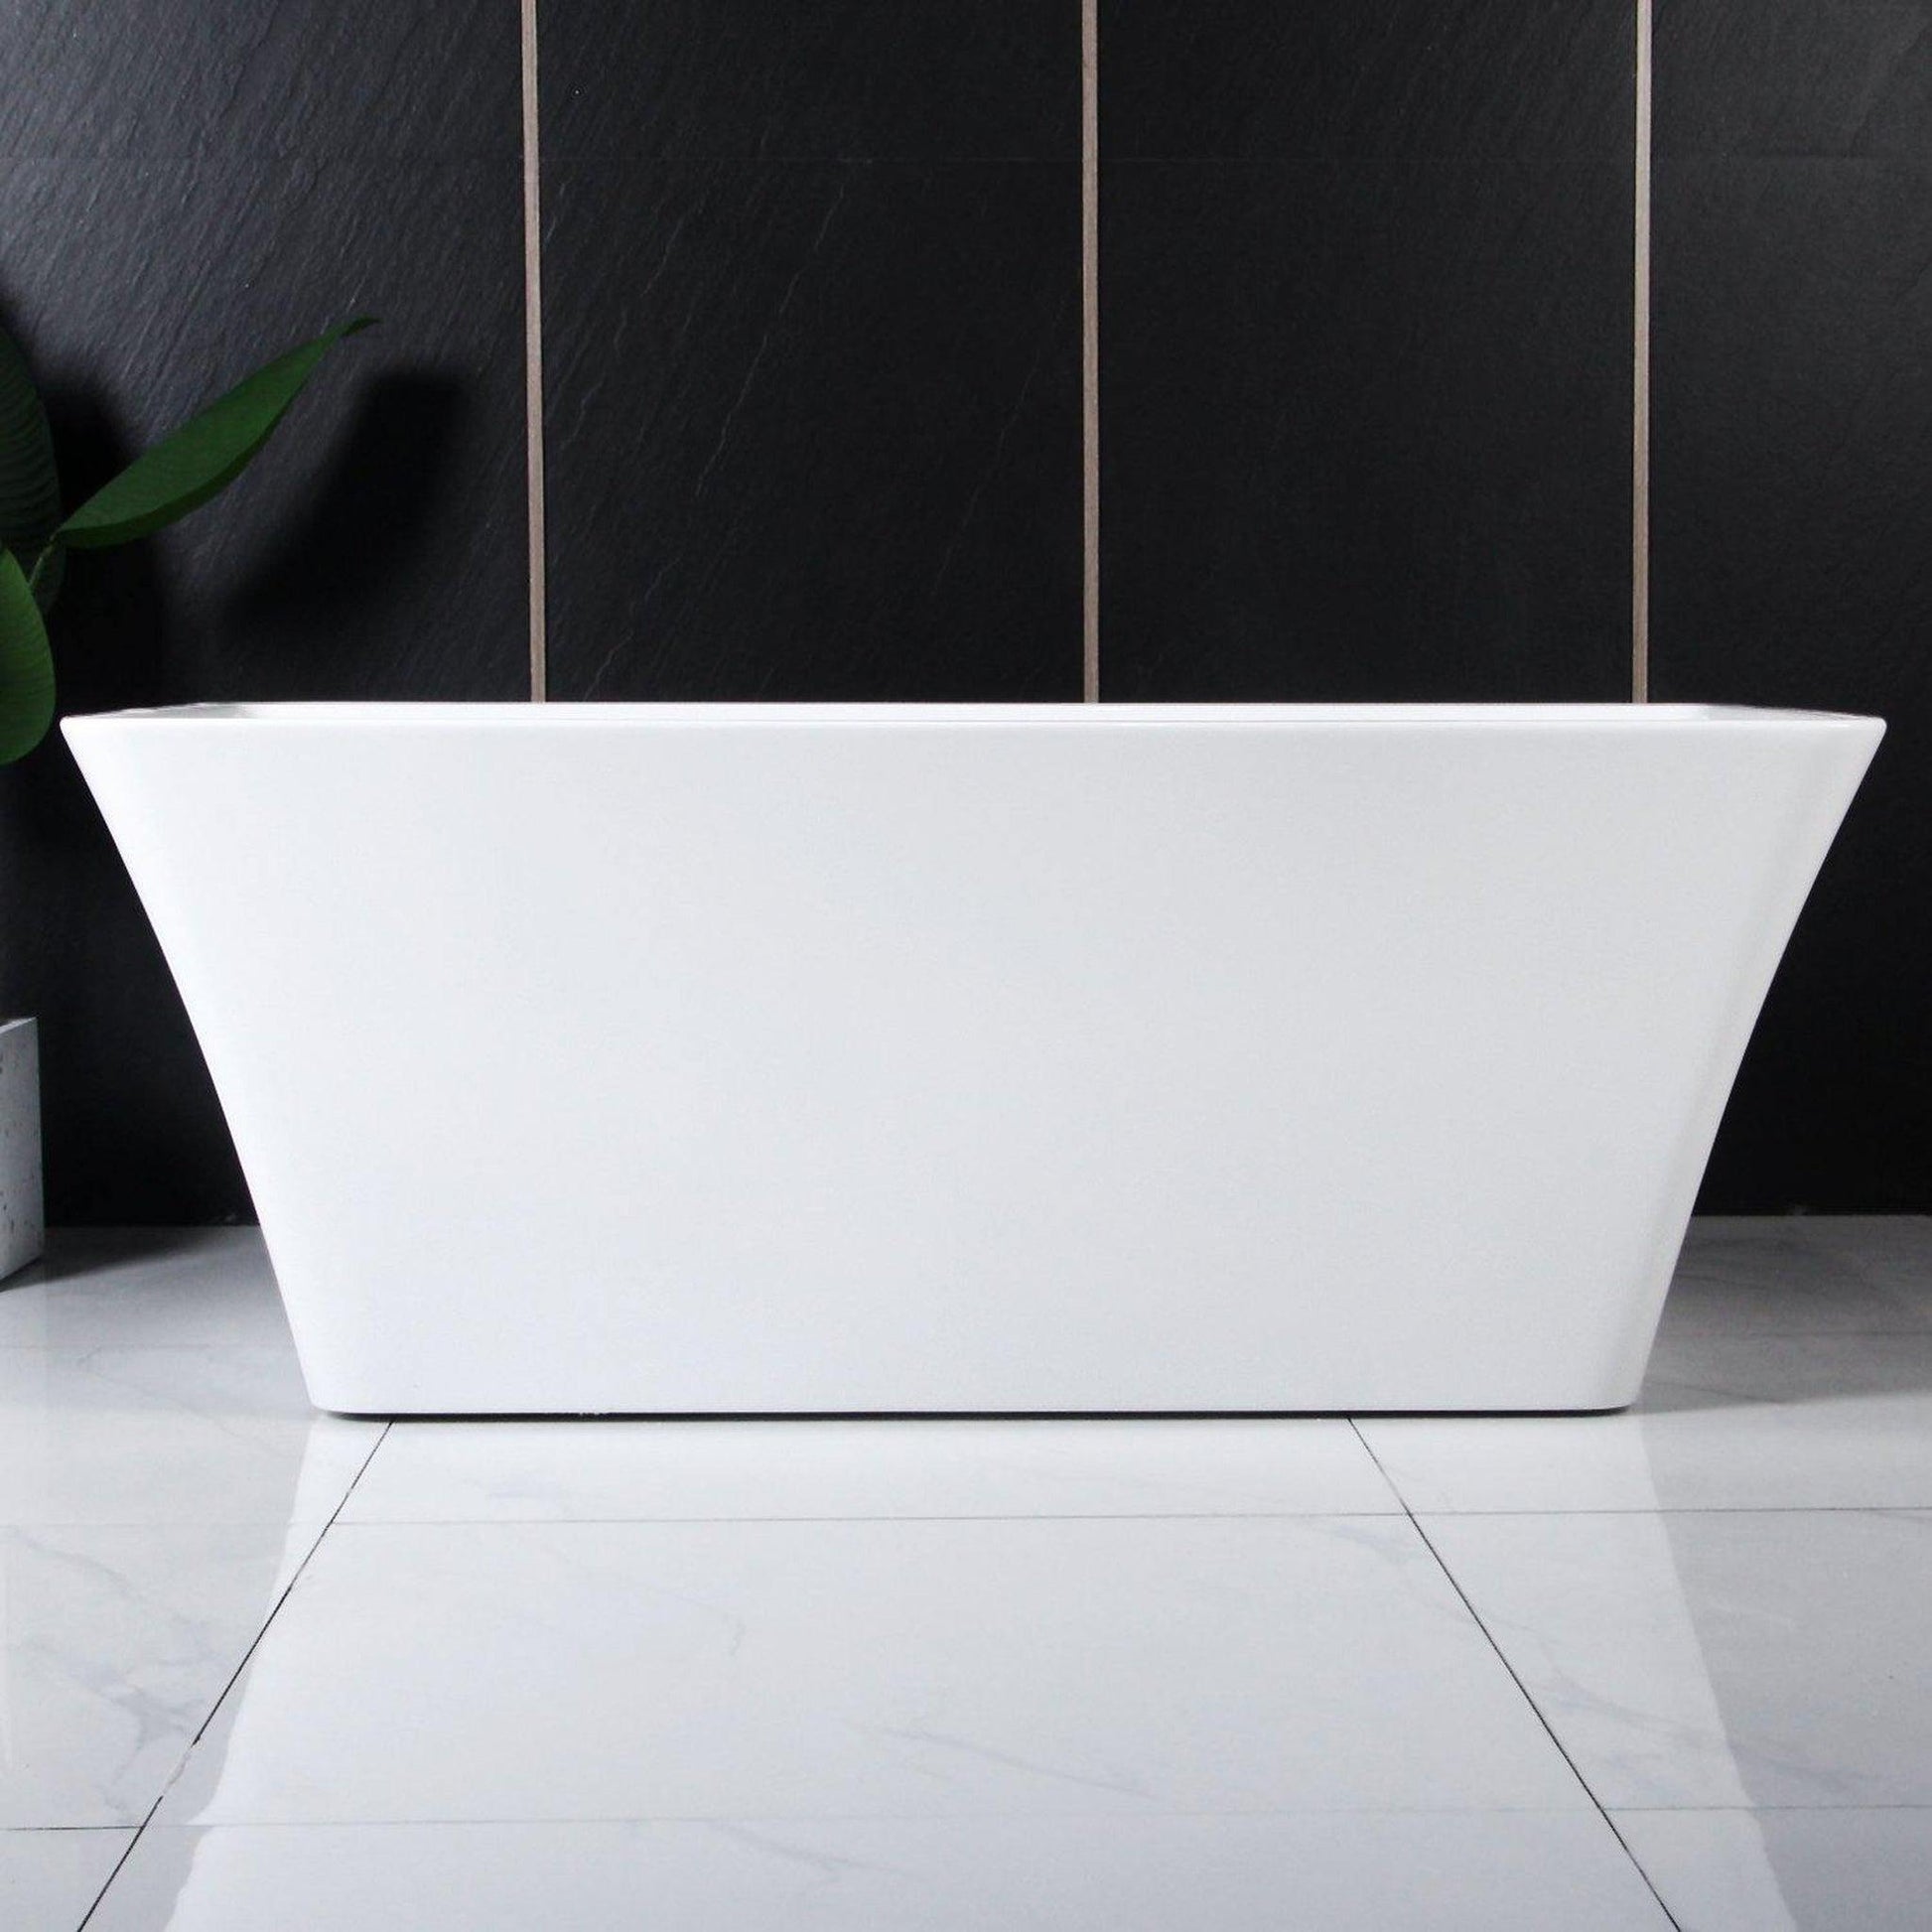 FerdY Sentosa 59" x 30" Rectangular Glossy White Acrylic Freestanding Double Slipper Soaking Bathtub With Brushed Nickel Drain and Overflow